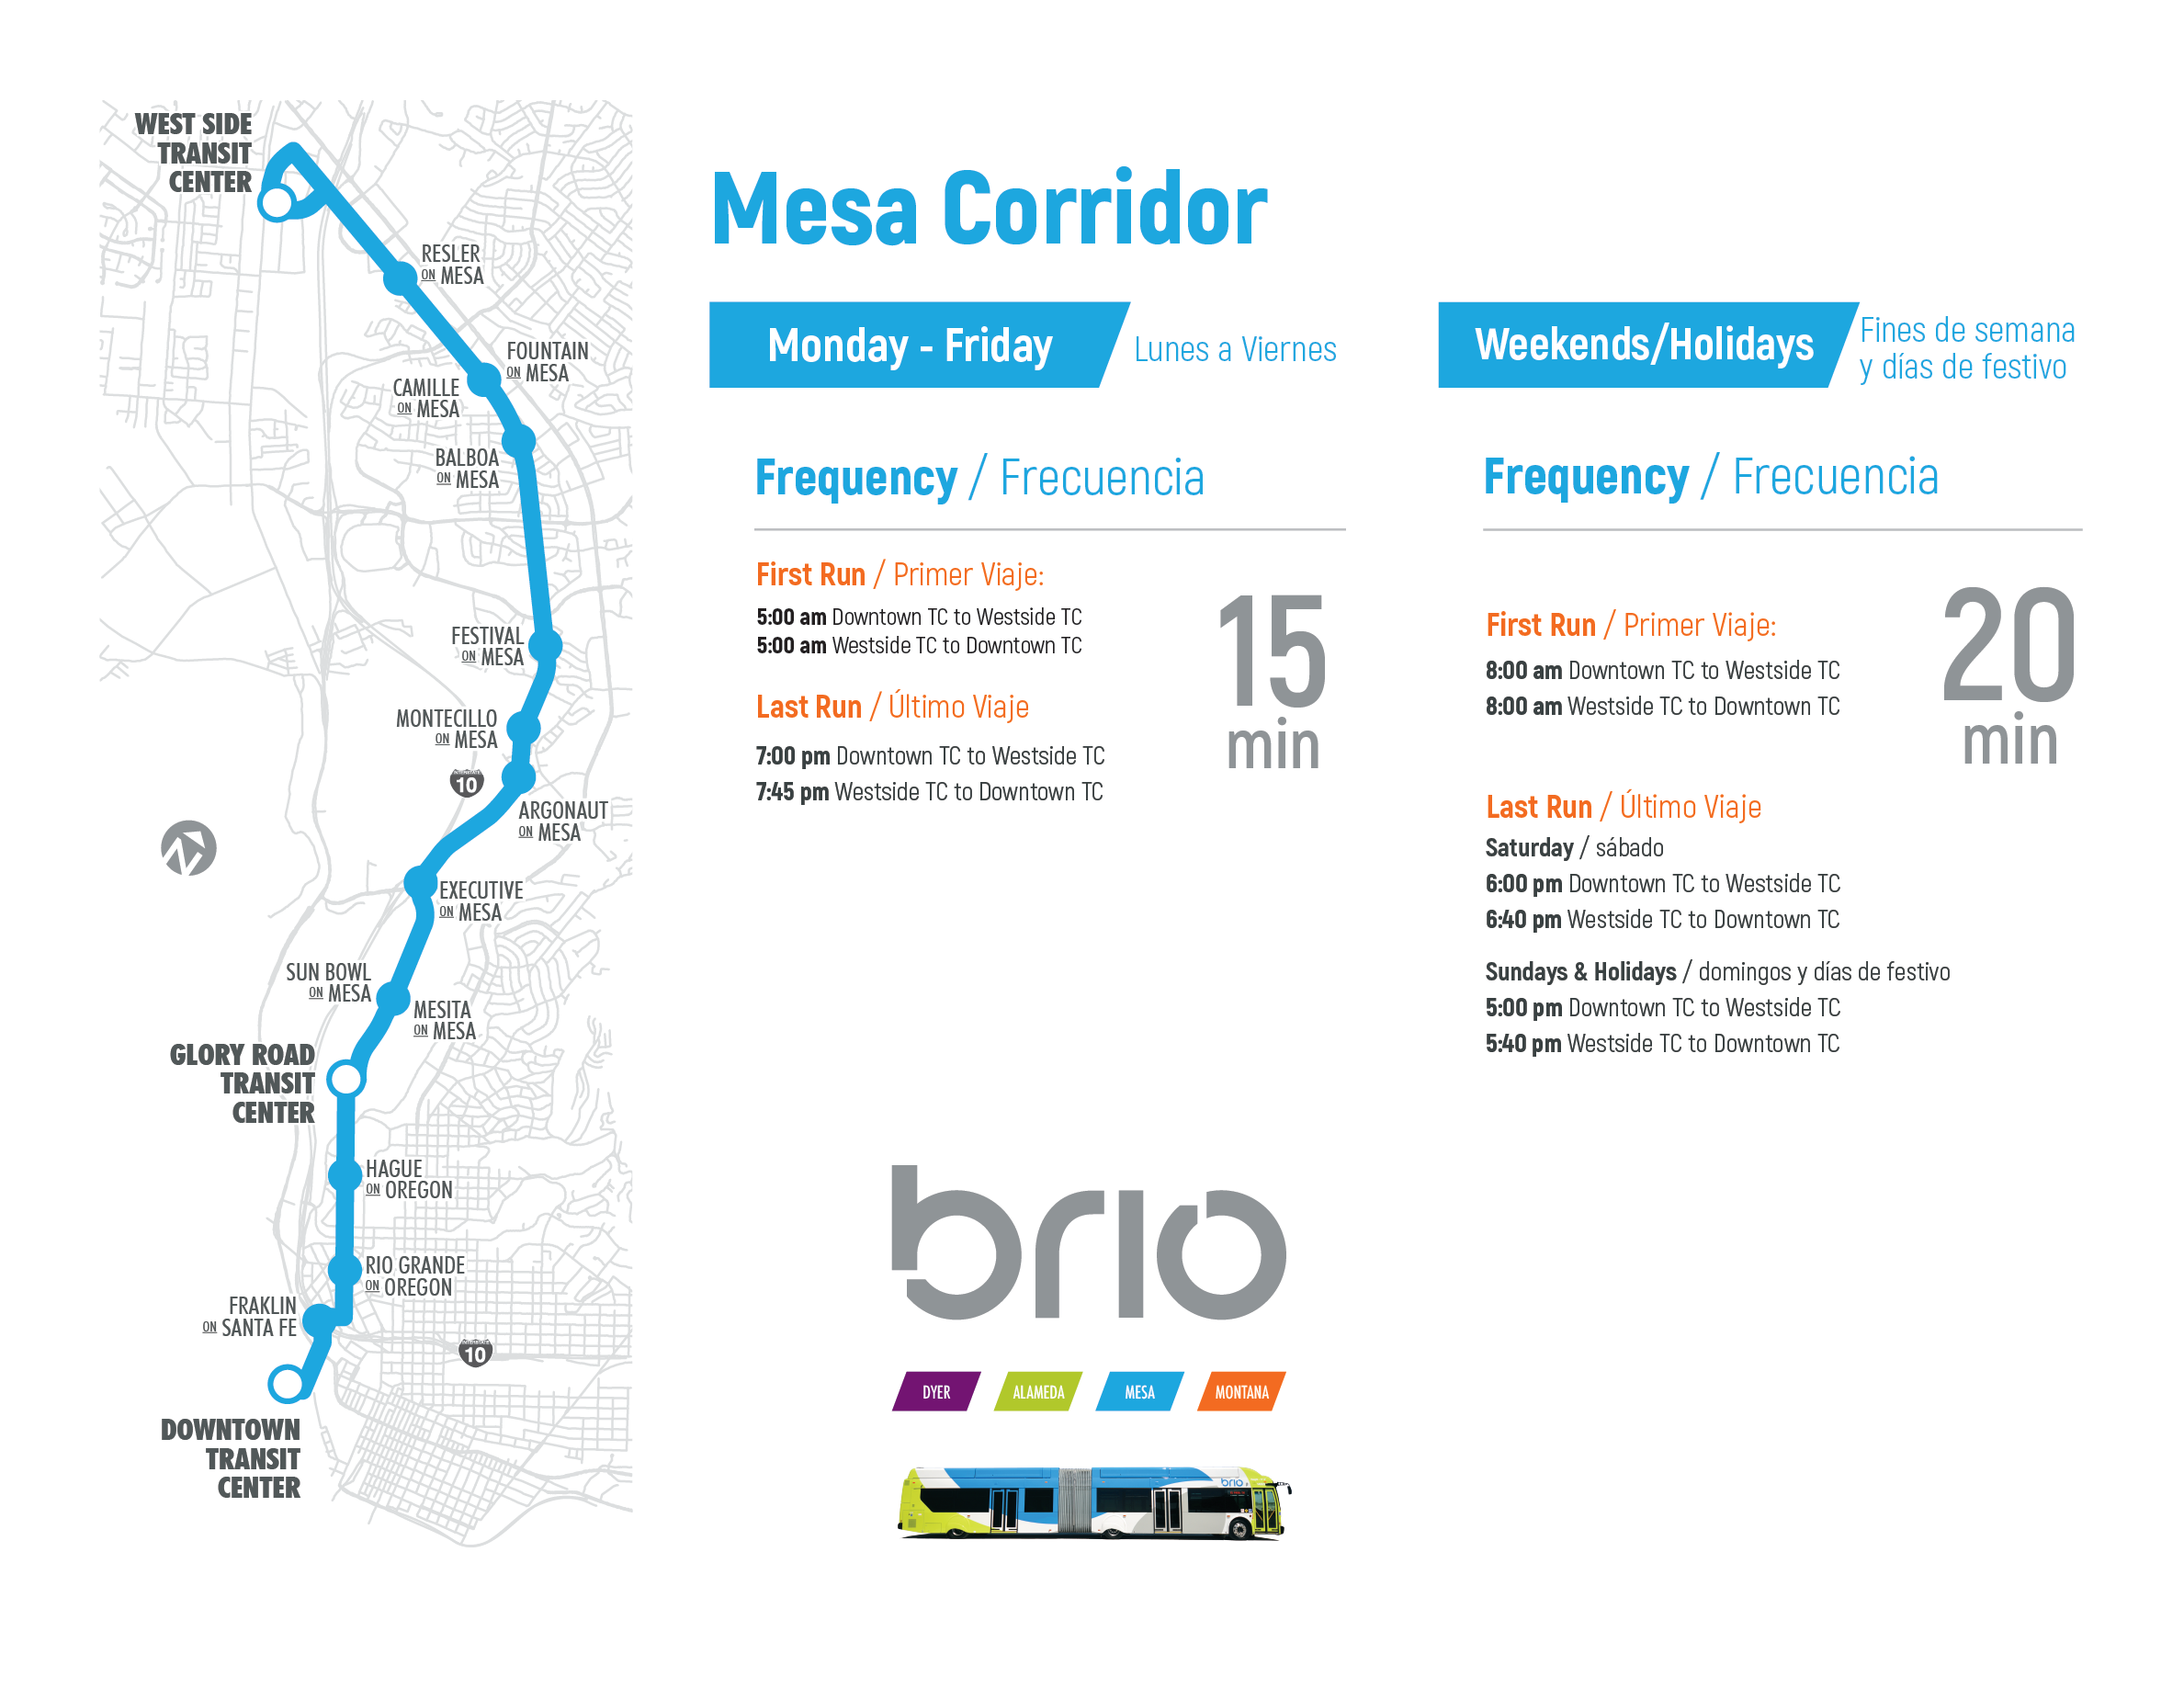 Image of Mesa Corridor route